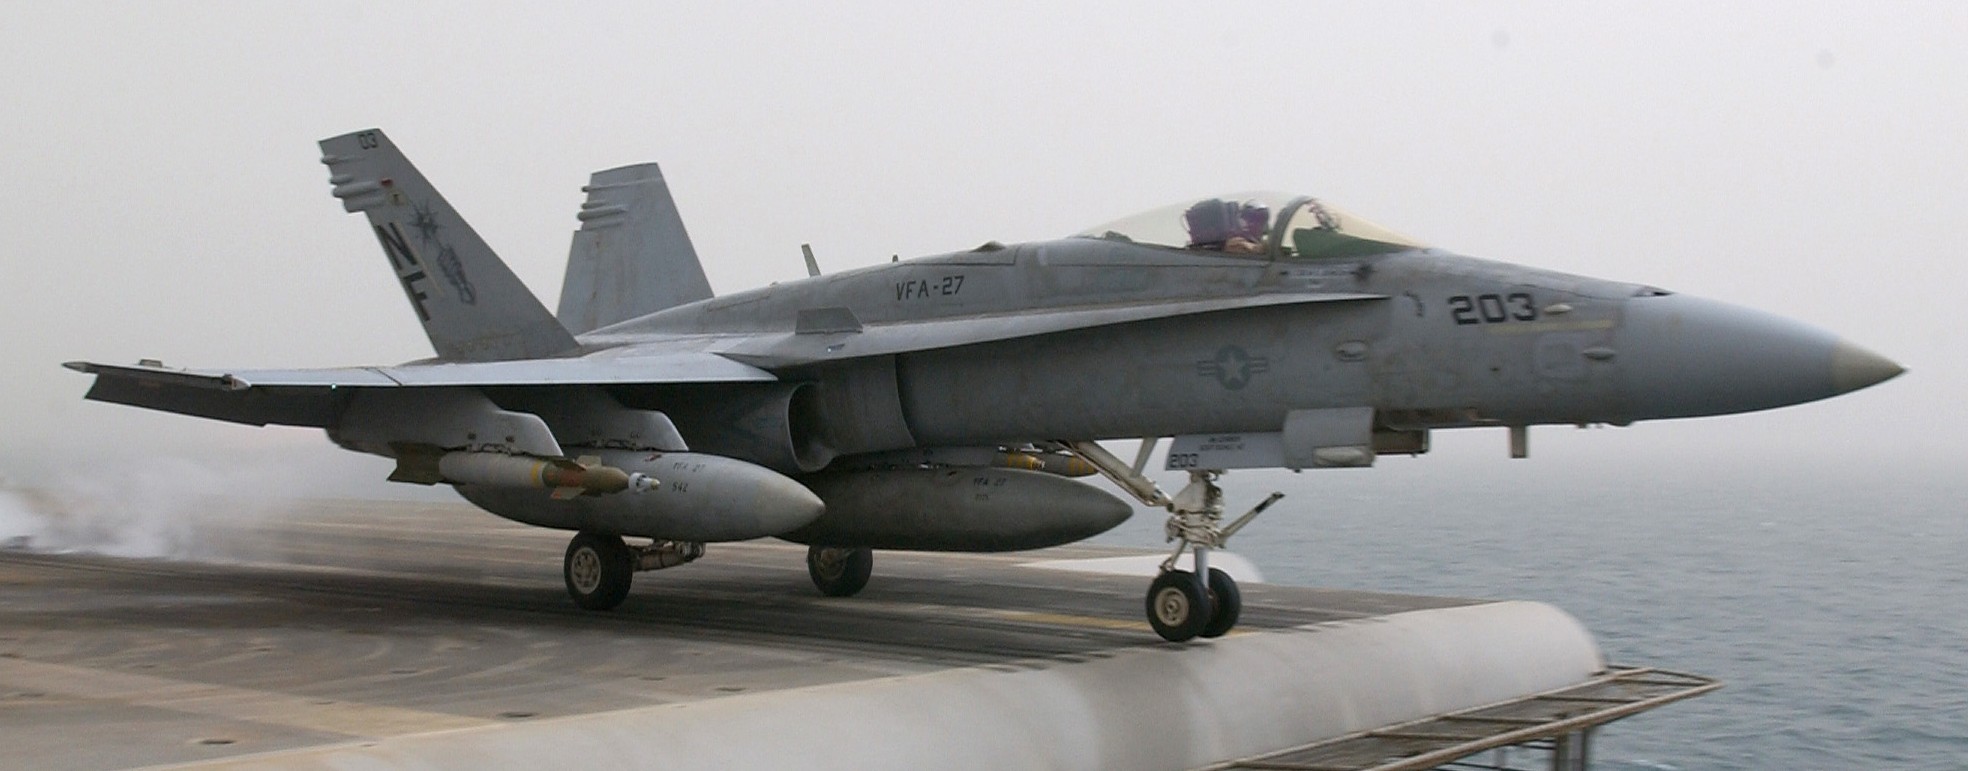 vfa-27 royal maces strike fighter squadron f/a-18c hornet cv-63 uss kitty hawk cvw-5 us navy 159p